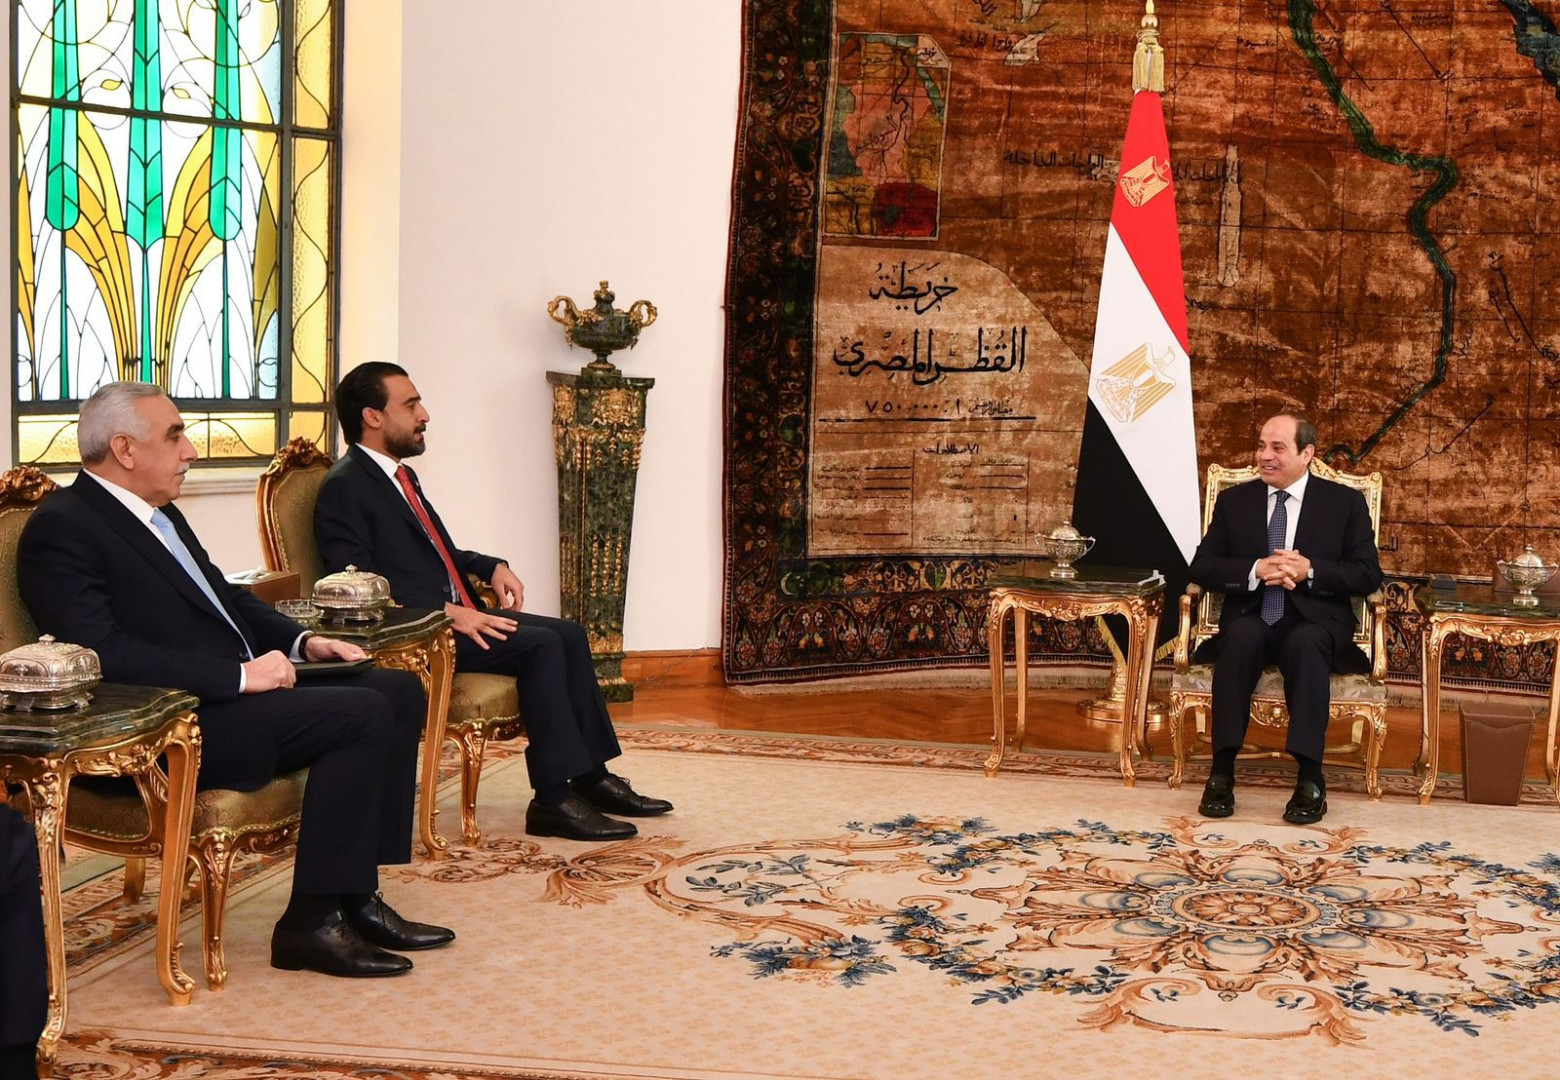 Al-Halboosi meets with the Egyptian President